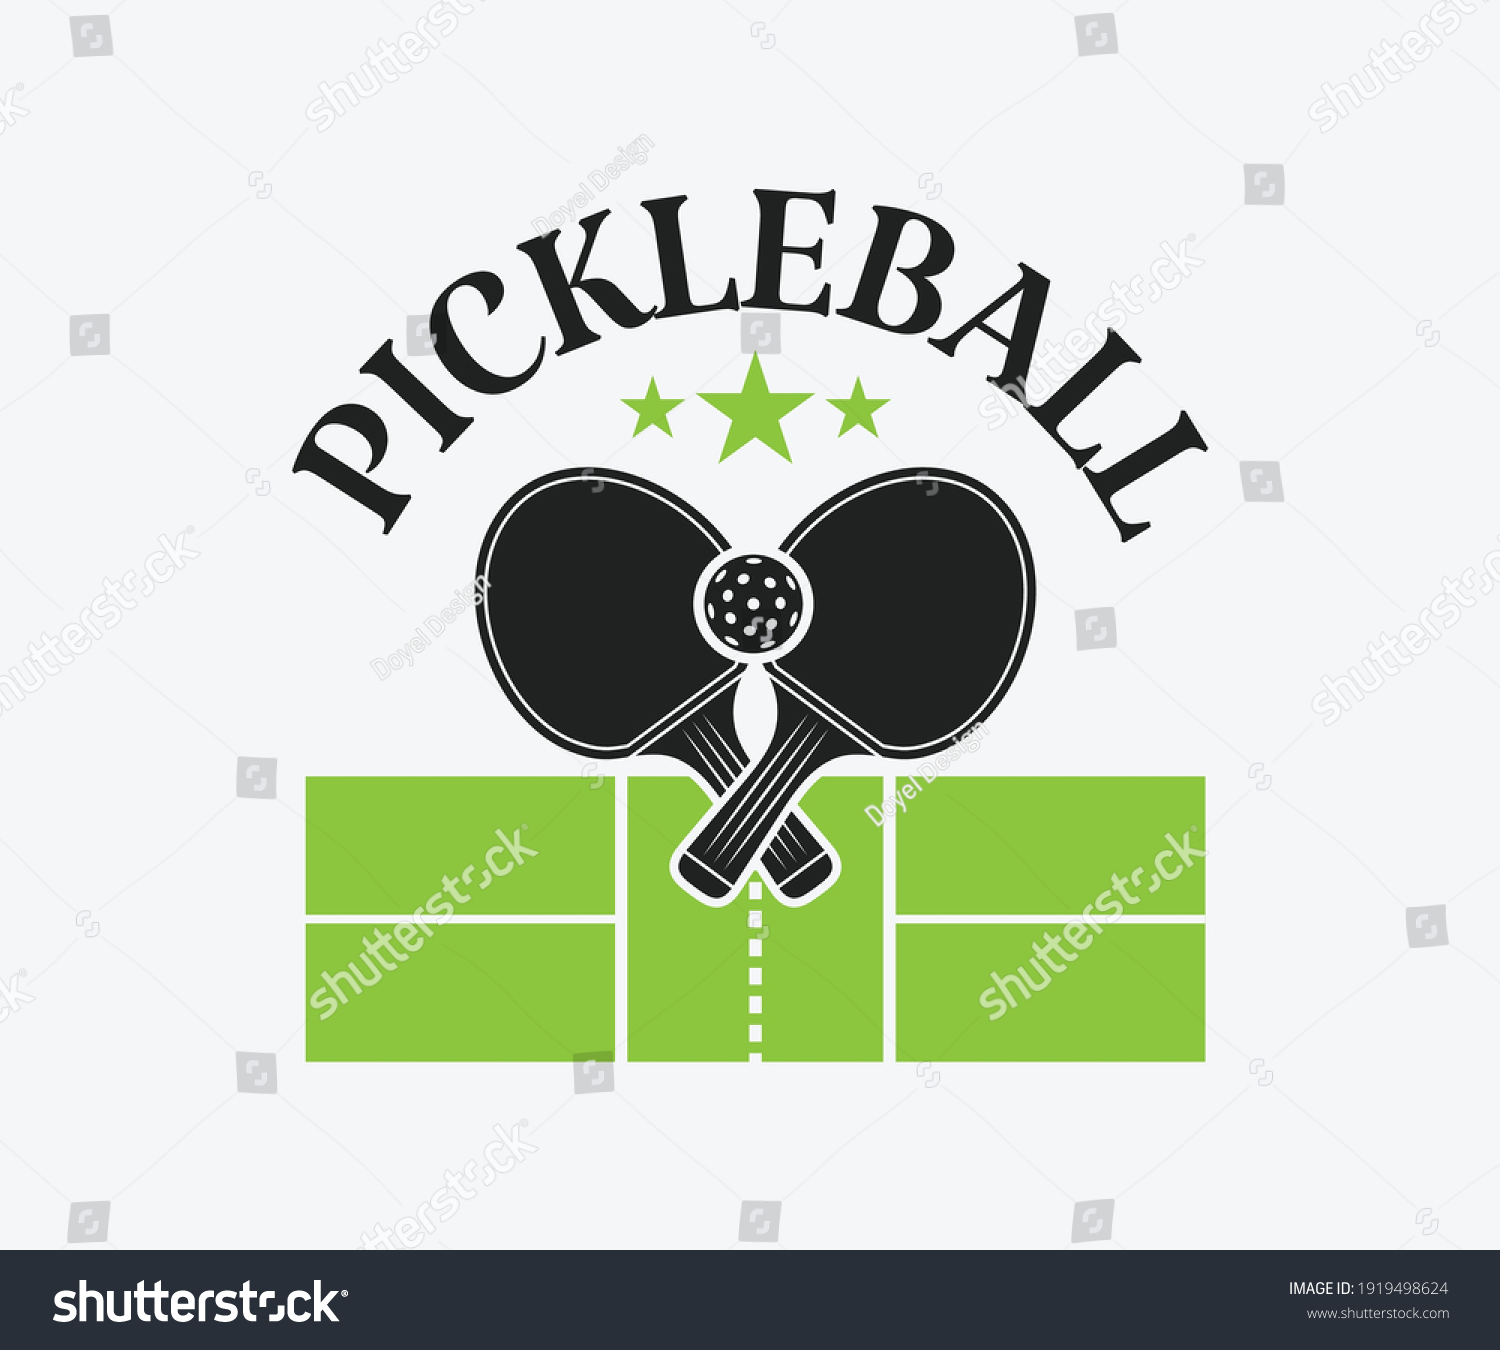 SVG of Pickleball, Printable Vector Illustration. Pickleball SVG. Great for badge t-shirt and postcard designs. Vector graphic illustration. svg